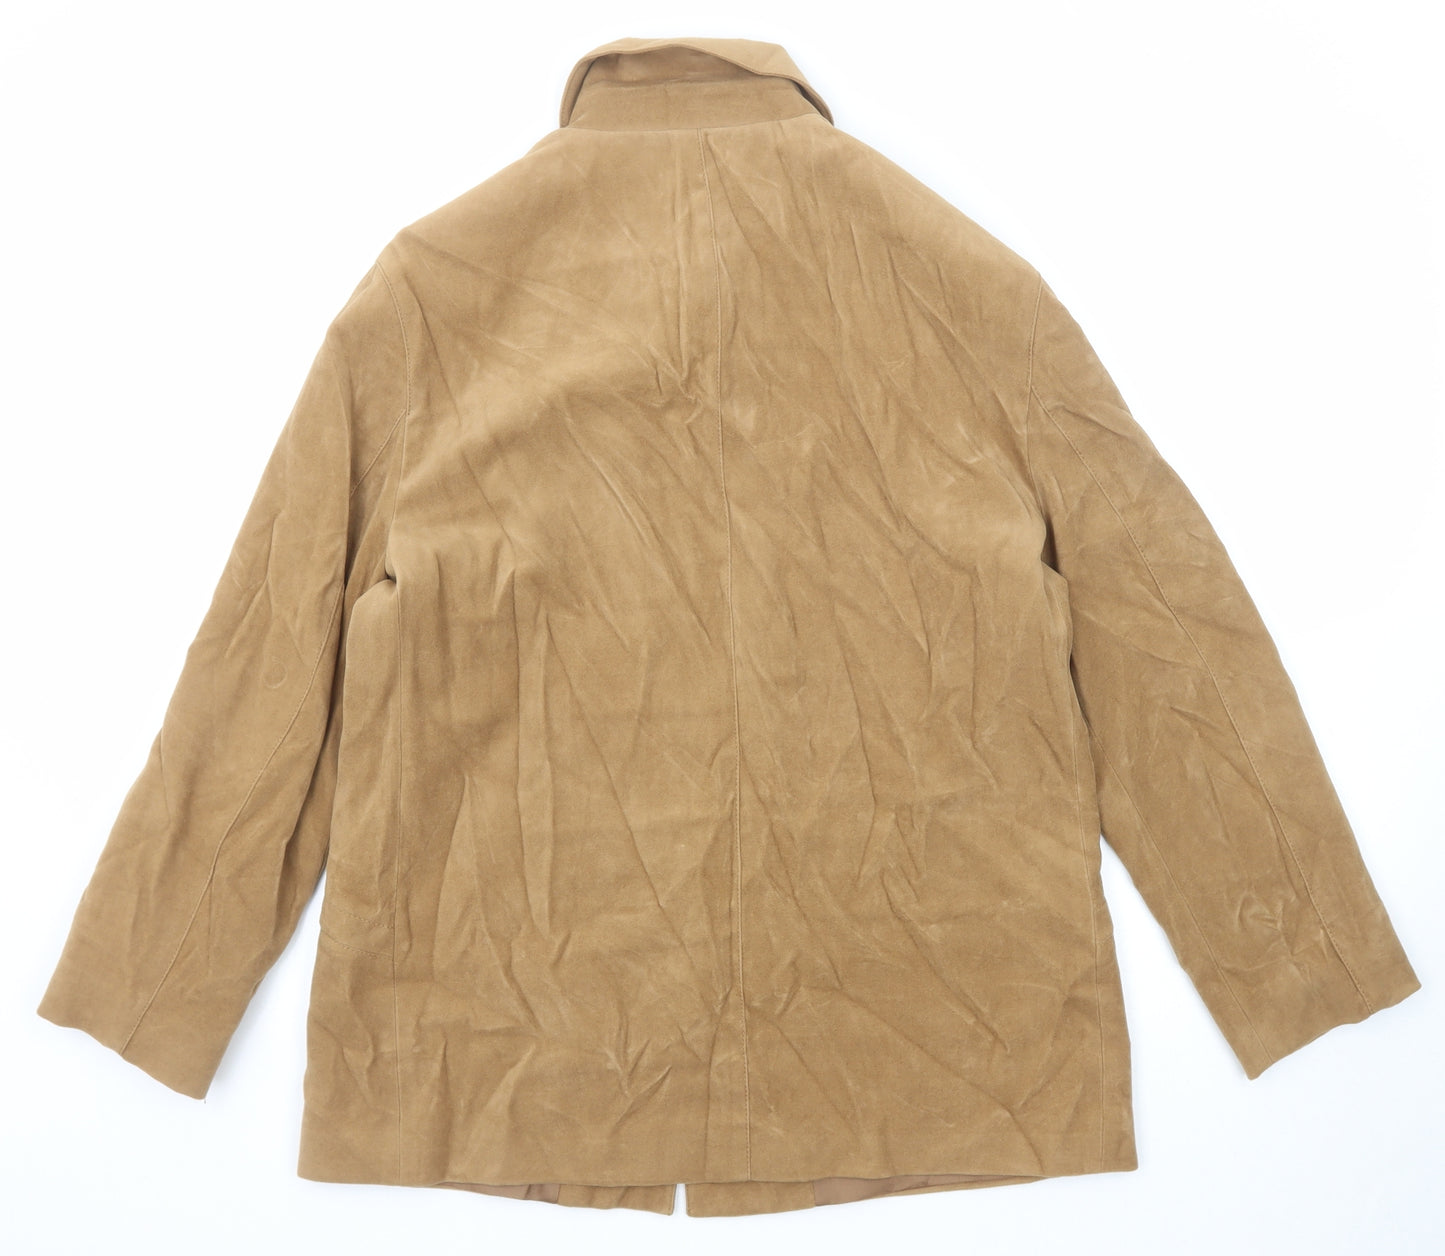 Emil Womens Beige Jacket Size 16 Button - Suede Effect